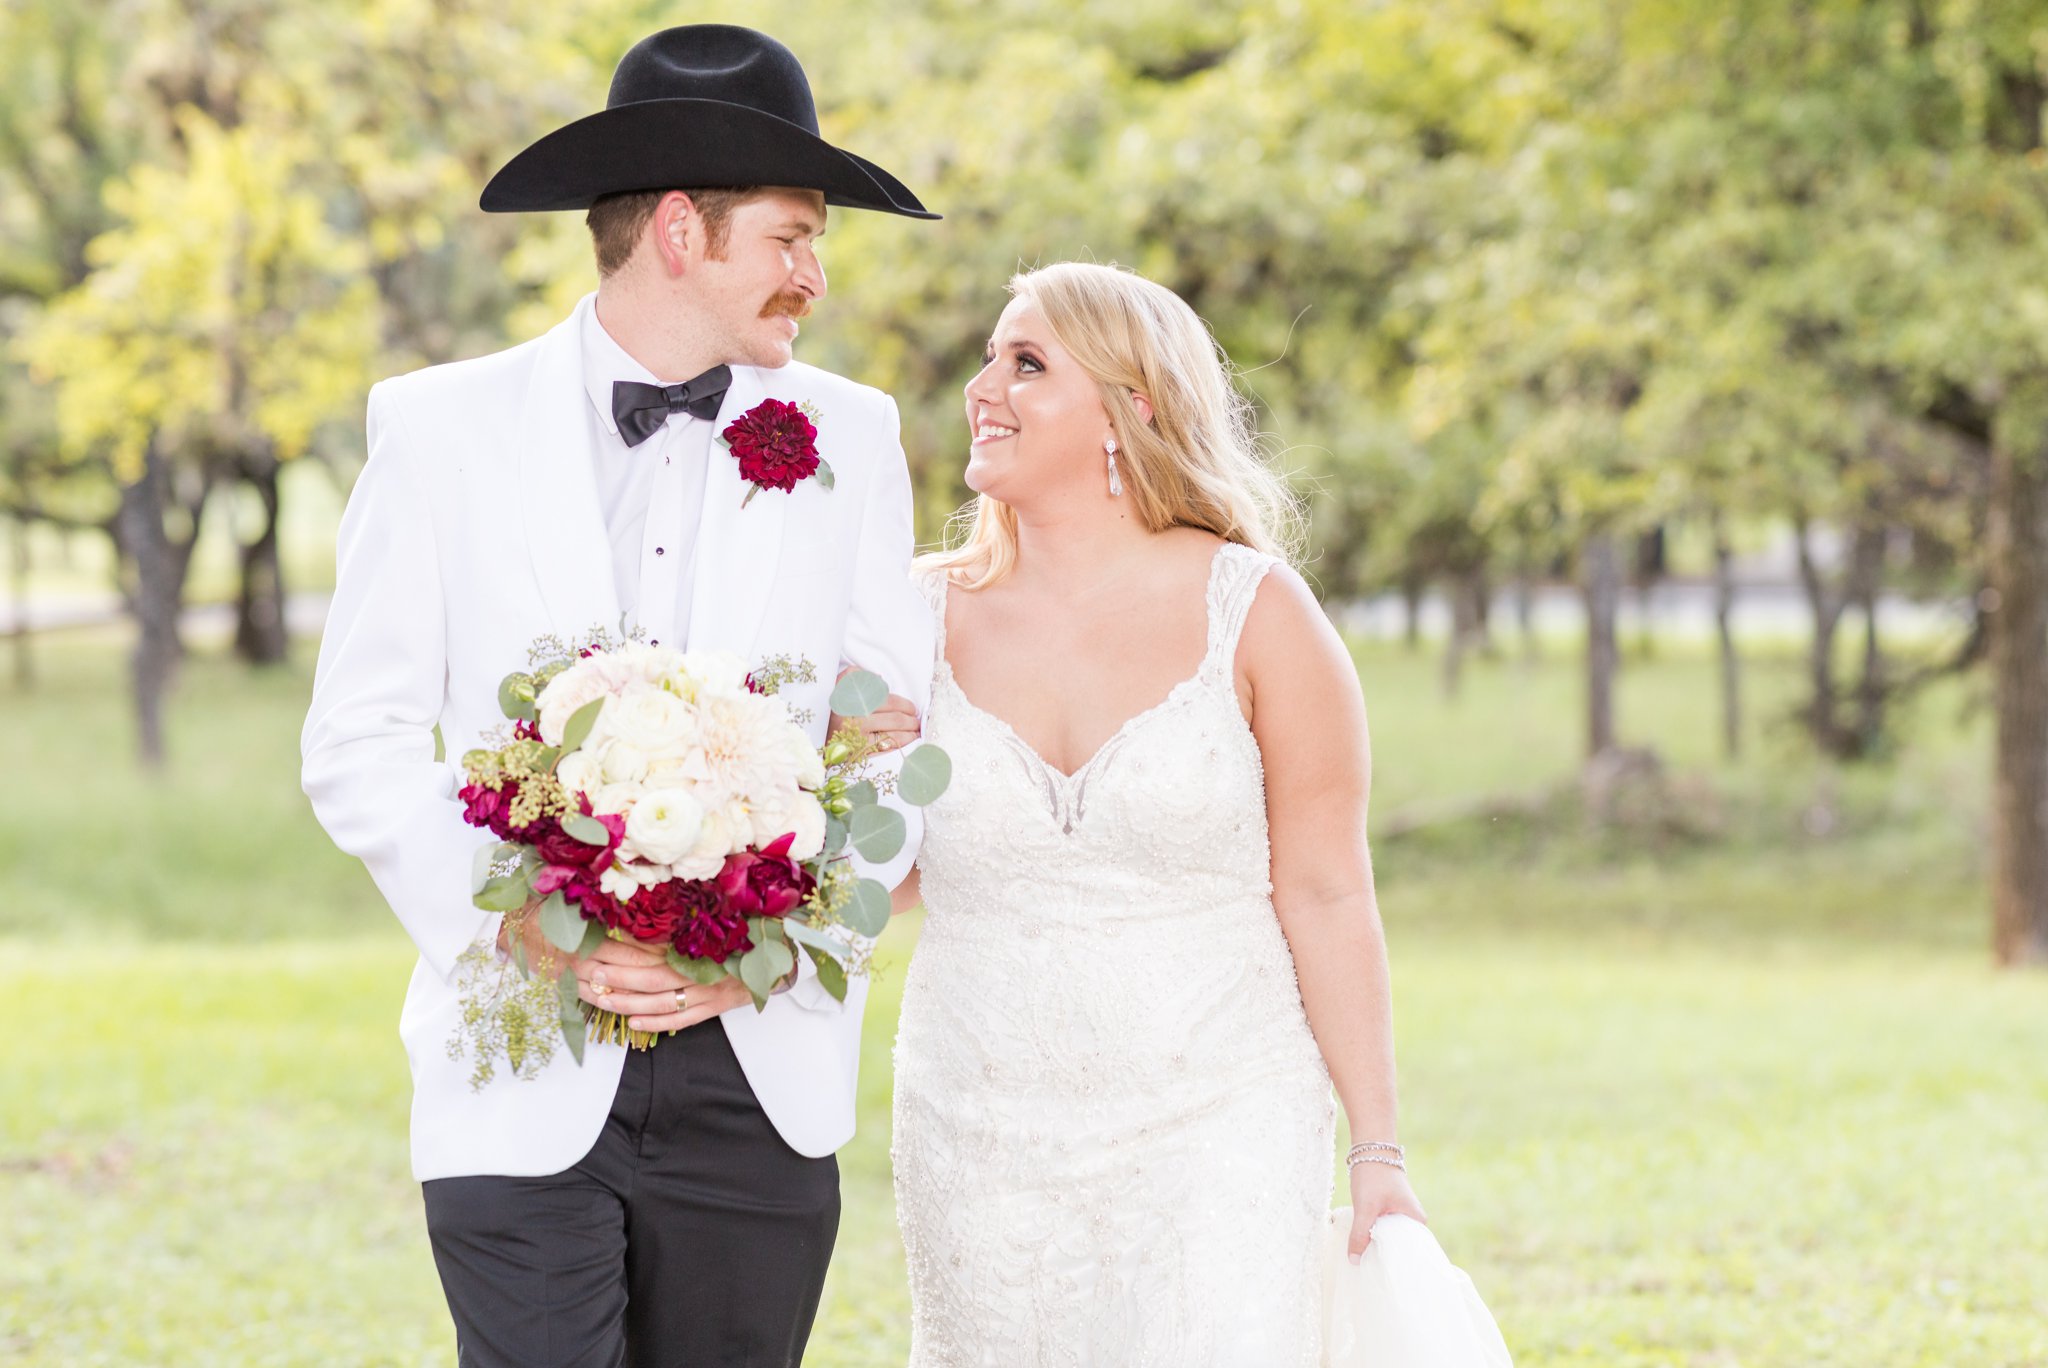 A Burgundy and Blush Wedding at Phoenician Ballroom in San Antonio, TX by Dawn Elizabeth Studios, San Antonio Wedding Photographer